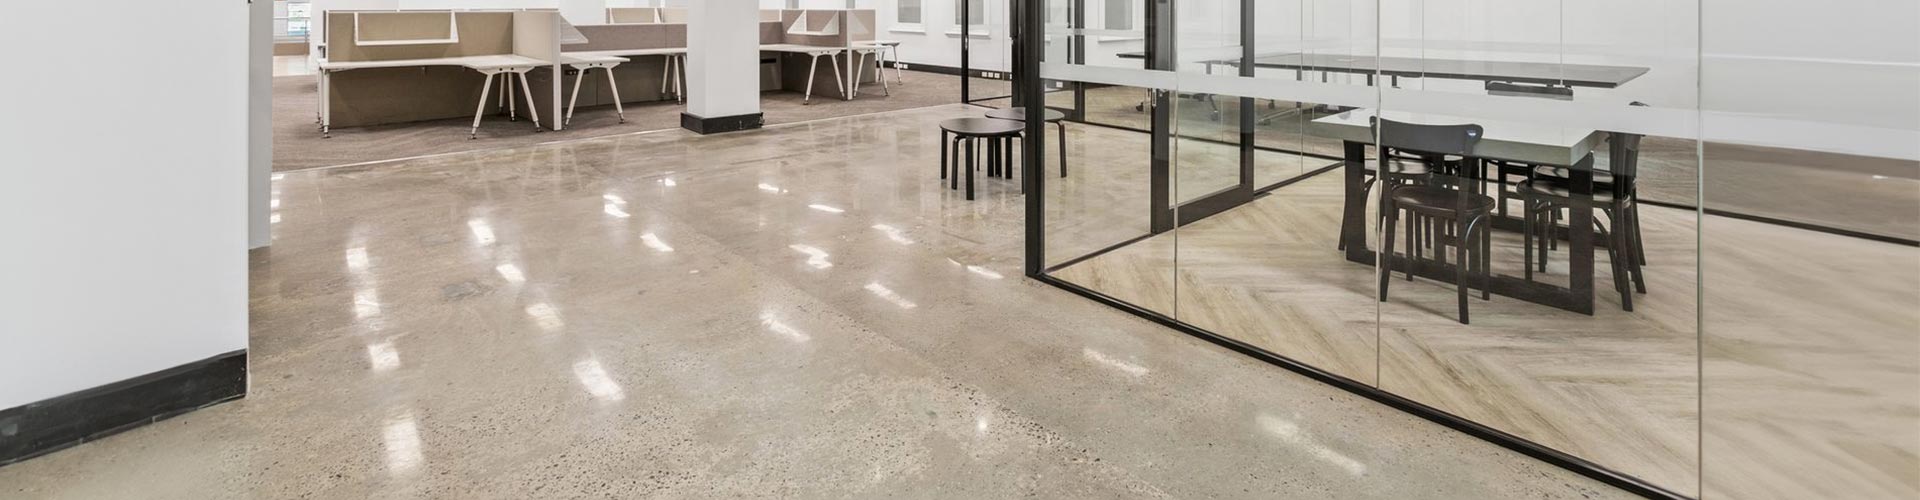 concrete floor design services